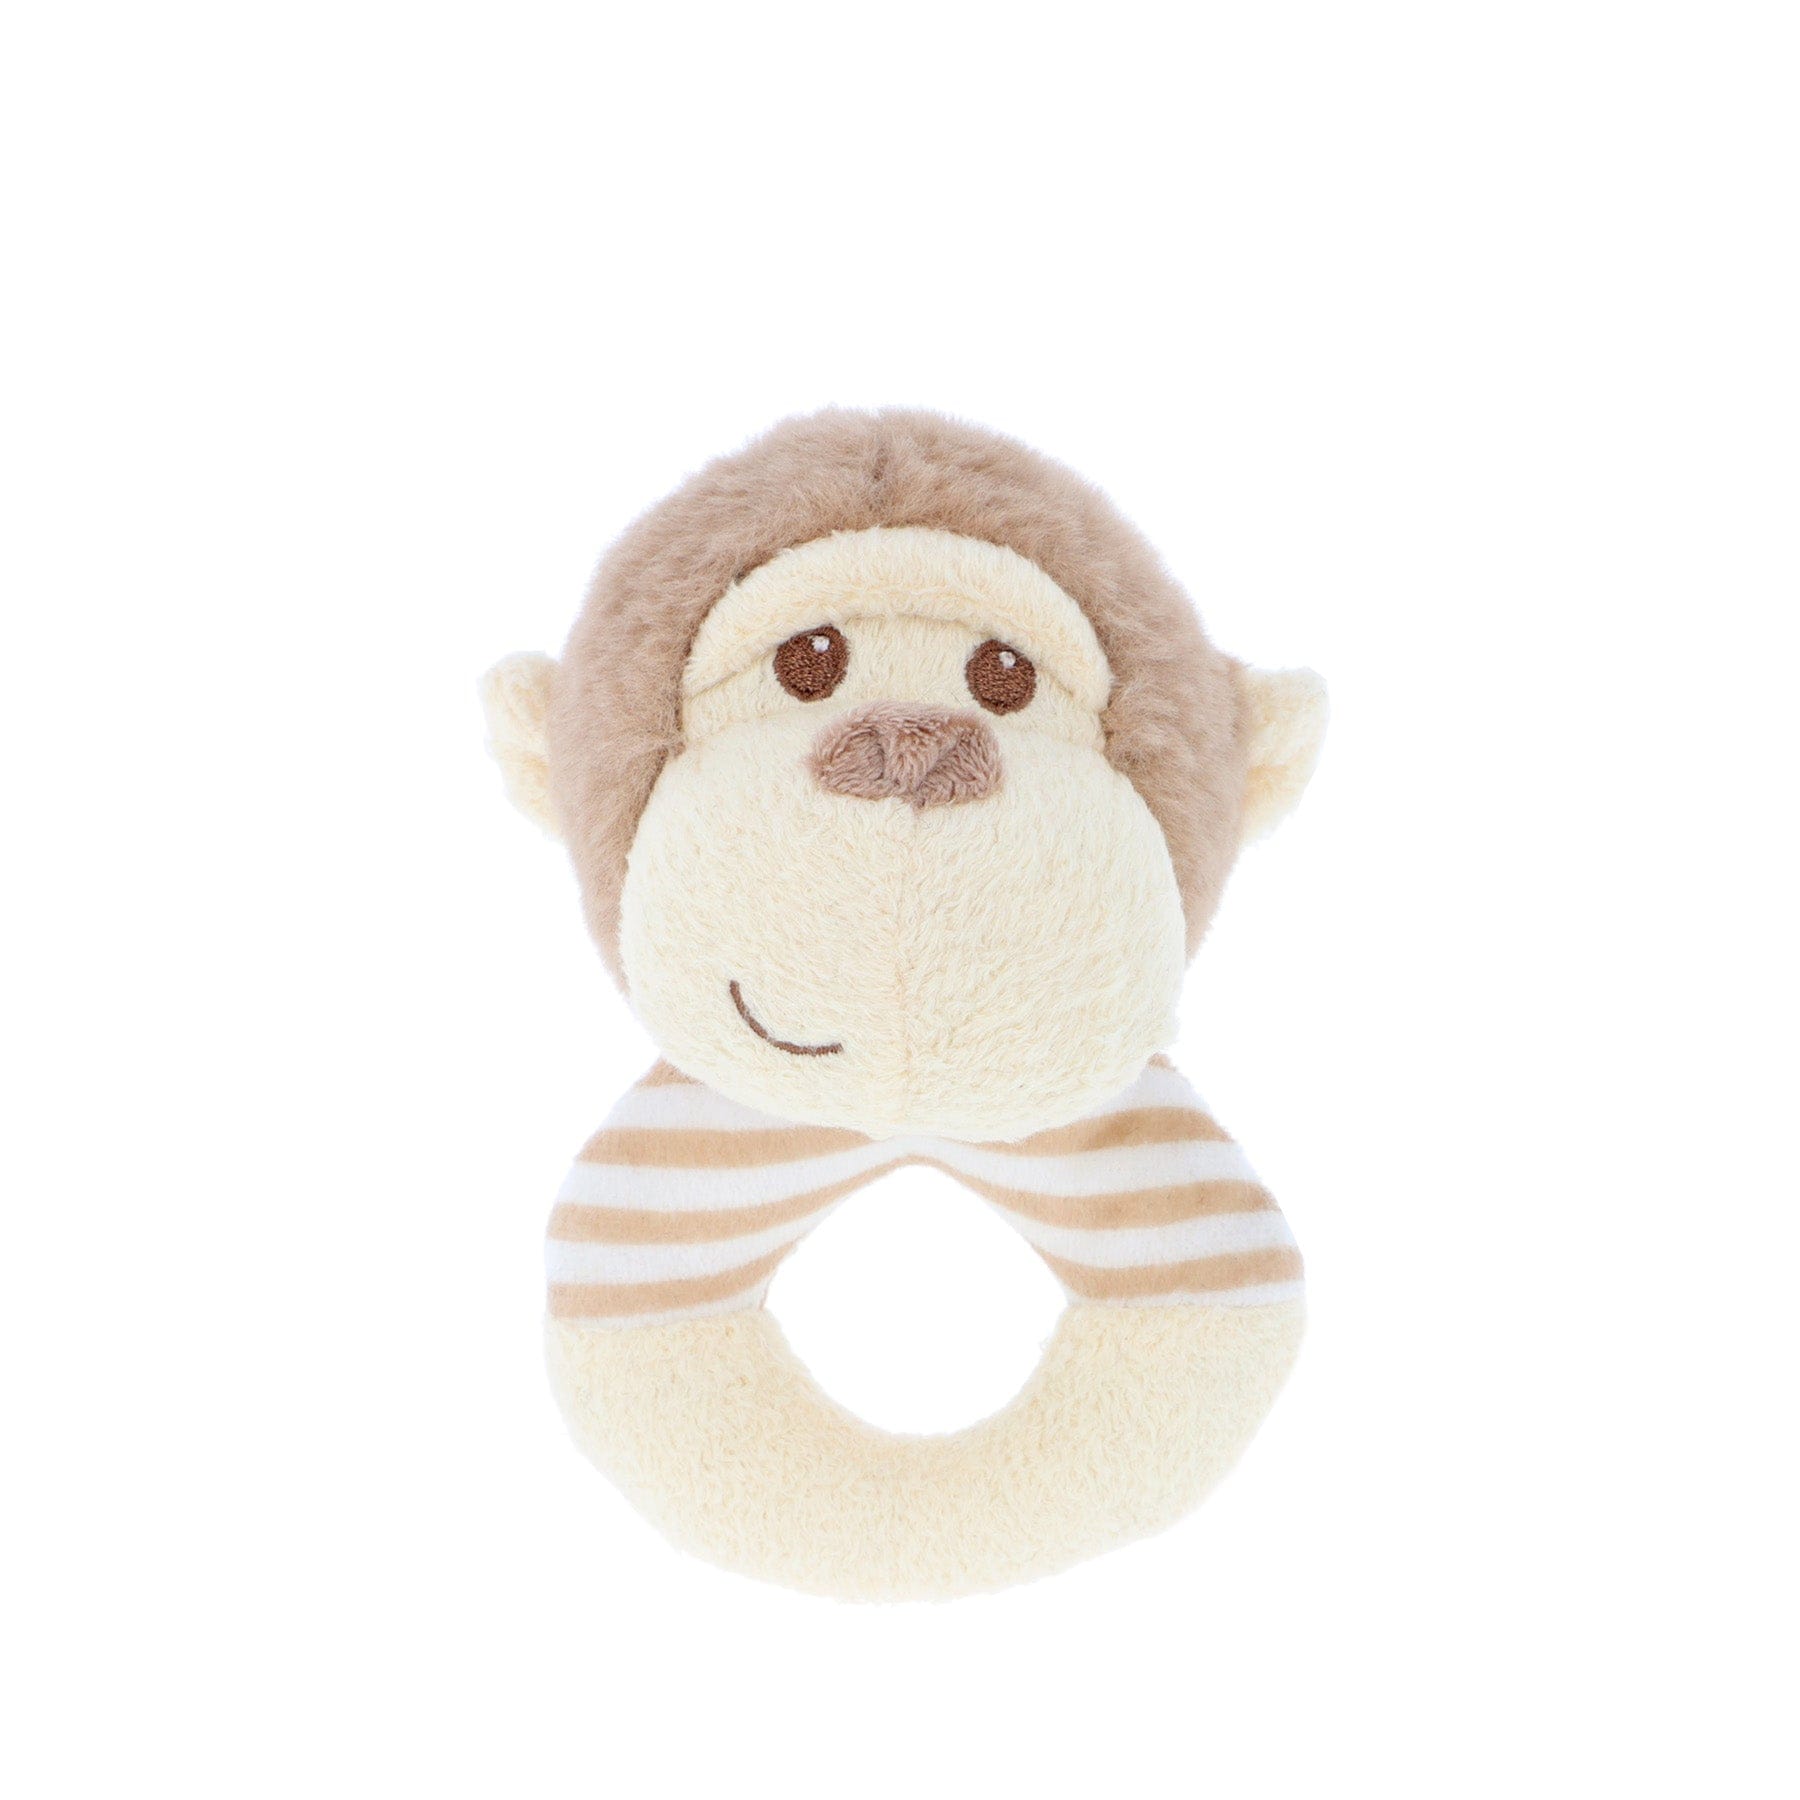 Plush monkey rattle toy, soft baby rattle, stuffed animal monkey with striped ring, infant toy, nursery decor, cute plushie